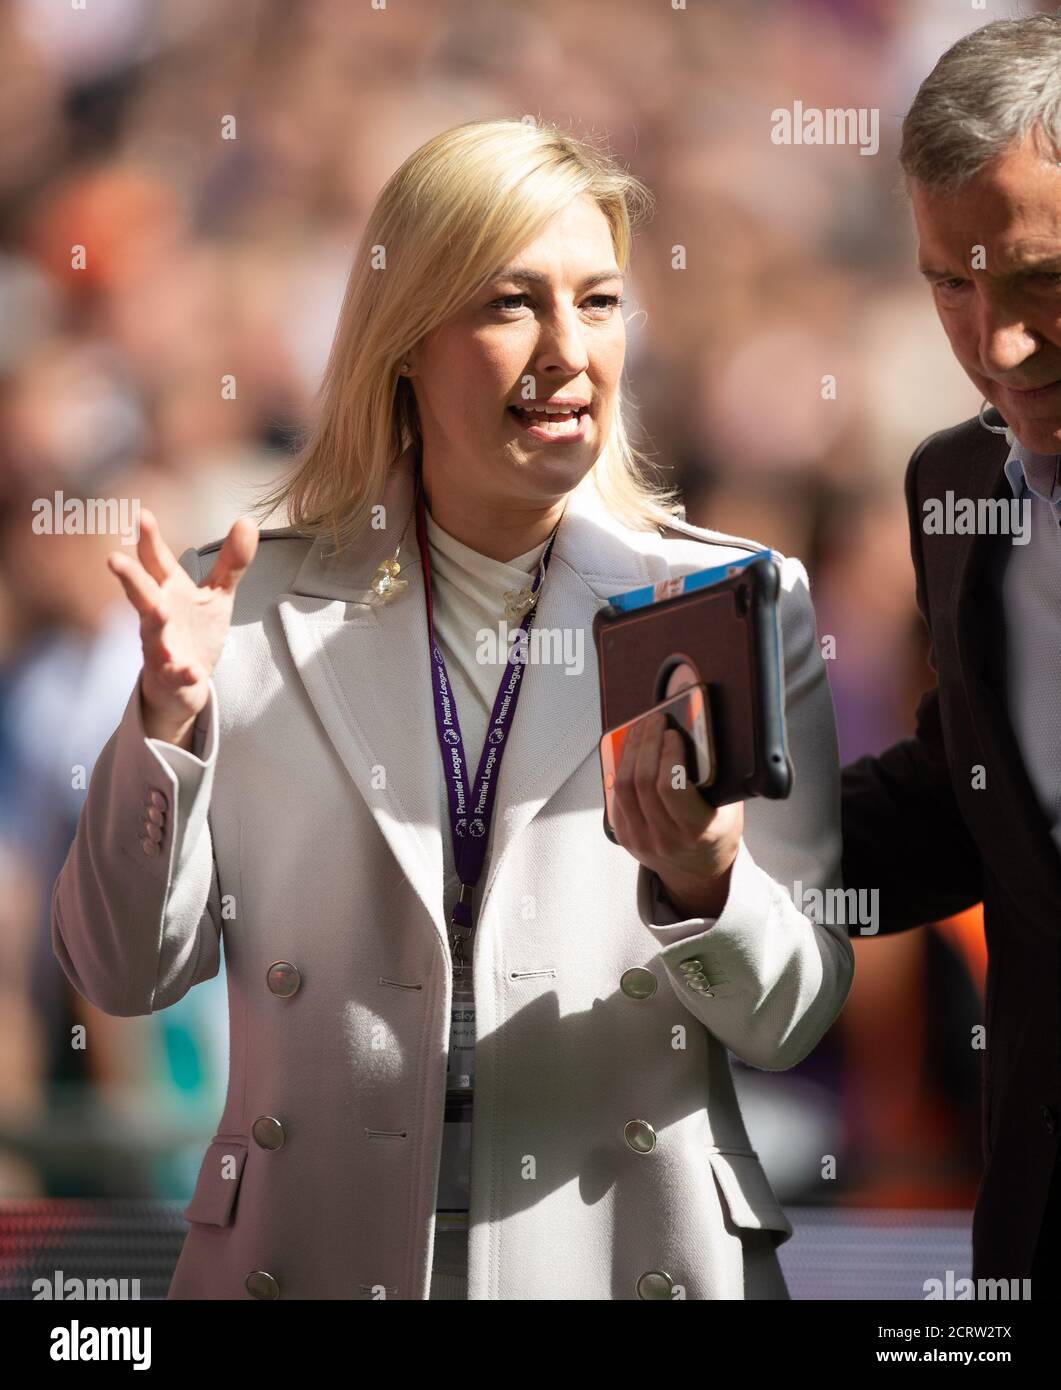 Sports Presenter Kelly Cates  PHOTO CREDIT : © MARK PAIN / ALAMY STOCK PHOTO Stock Photo